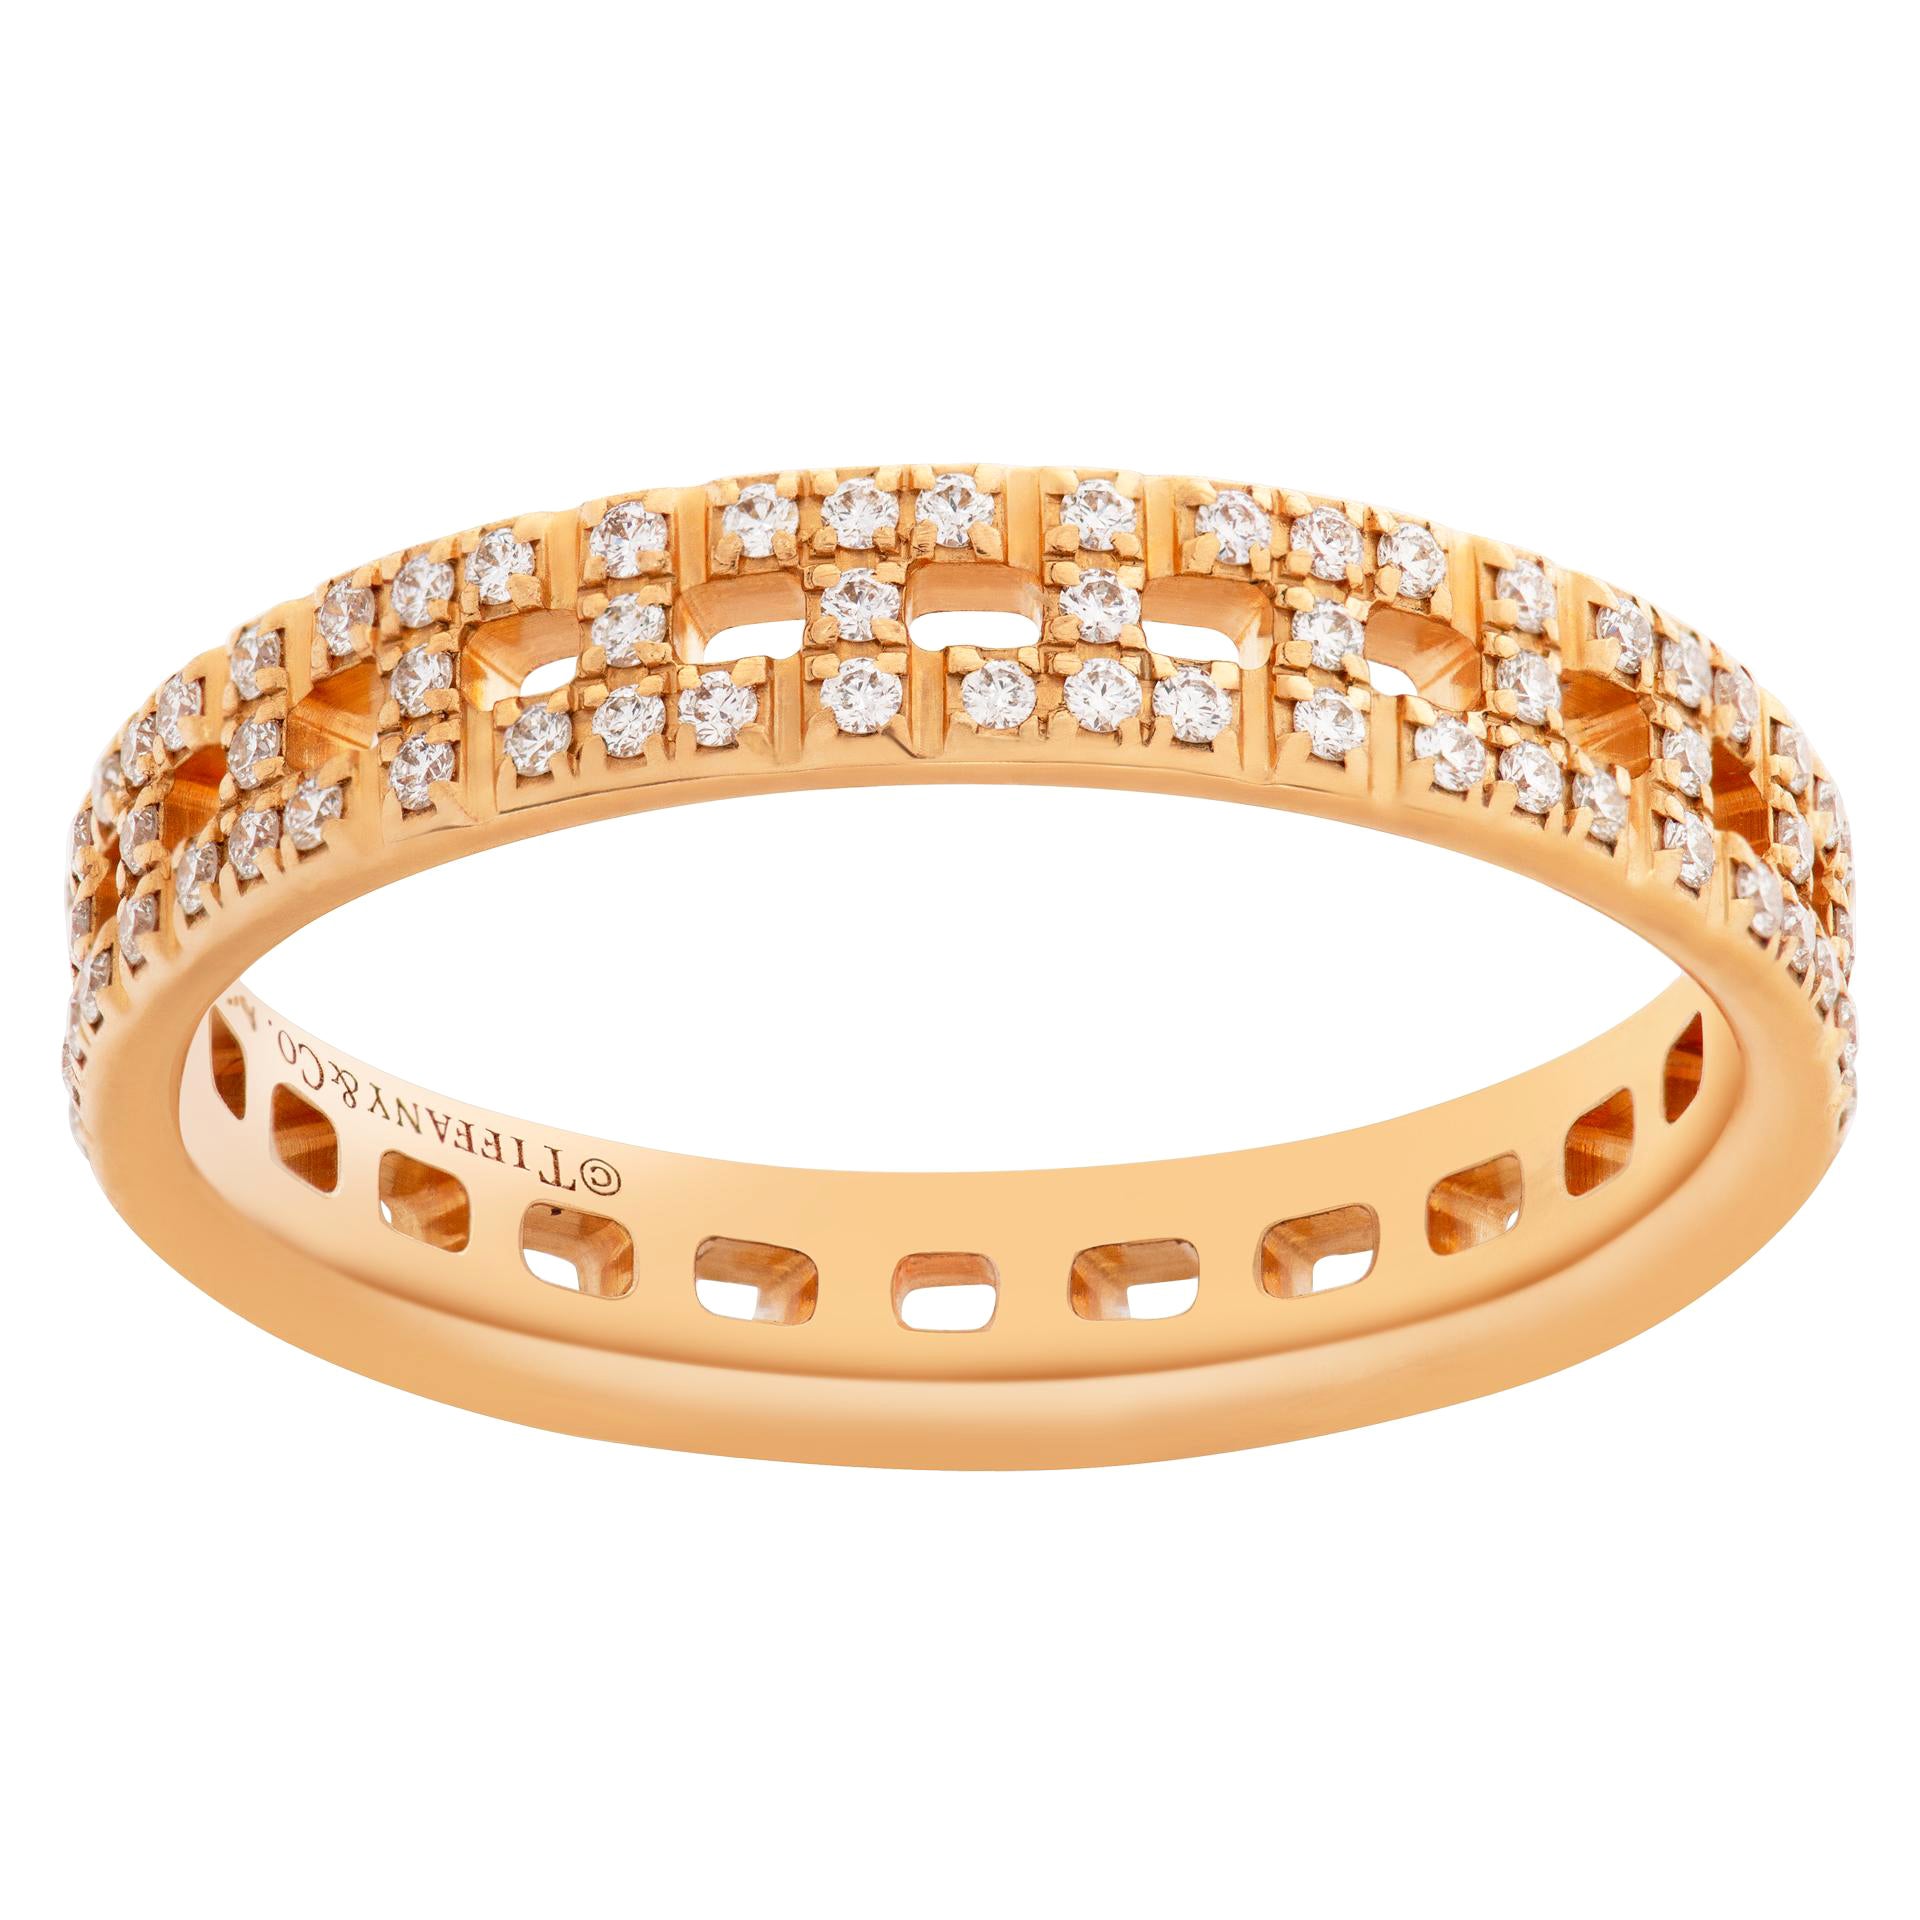 Diamond Ring in 18k Rose Gold, Tiffany & Co. "True Narrow"